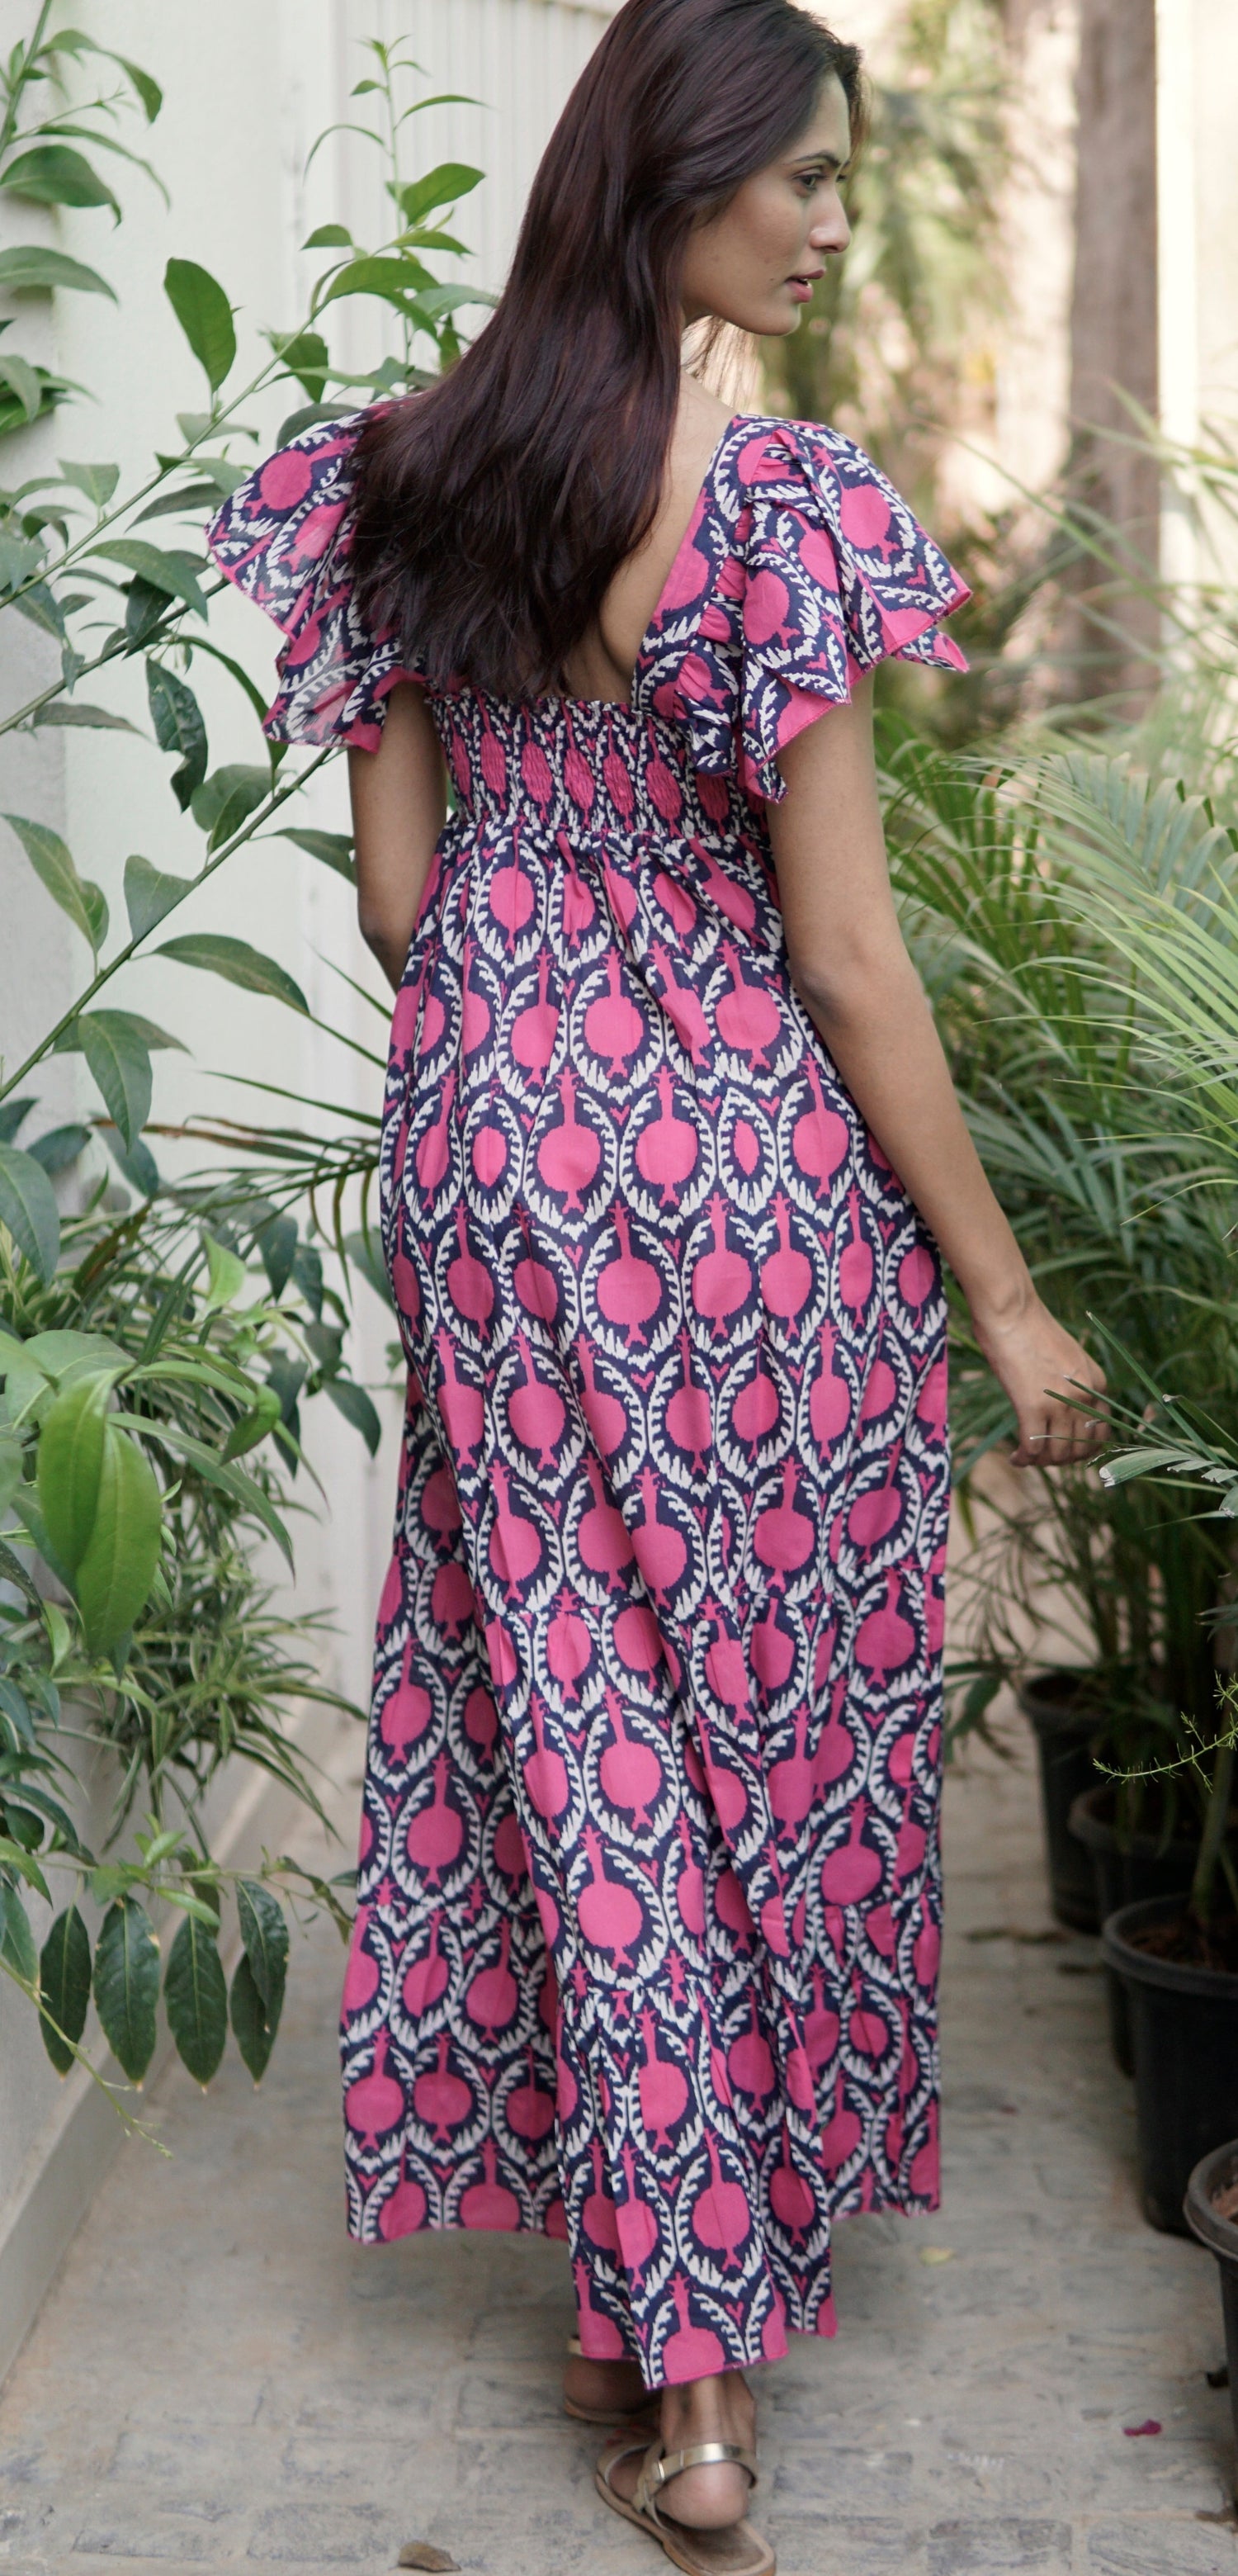 Fiesta Summer maxi dress. Pink, blue and white cotton, printed maxi dress